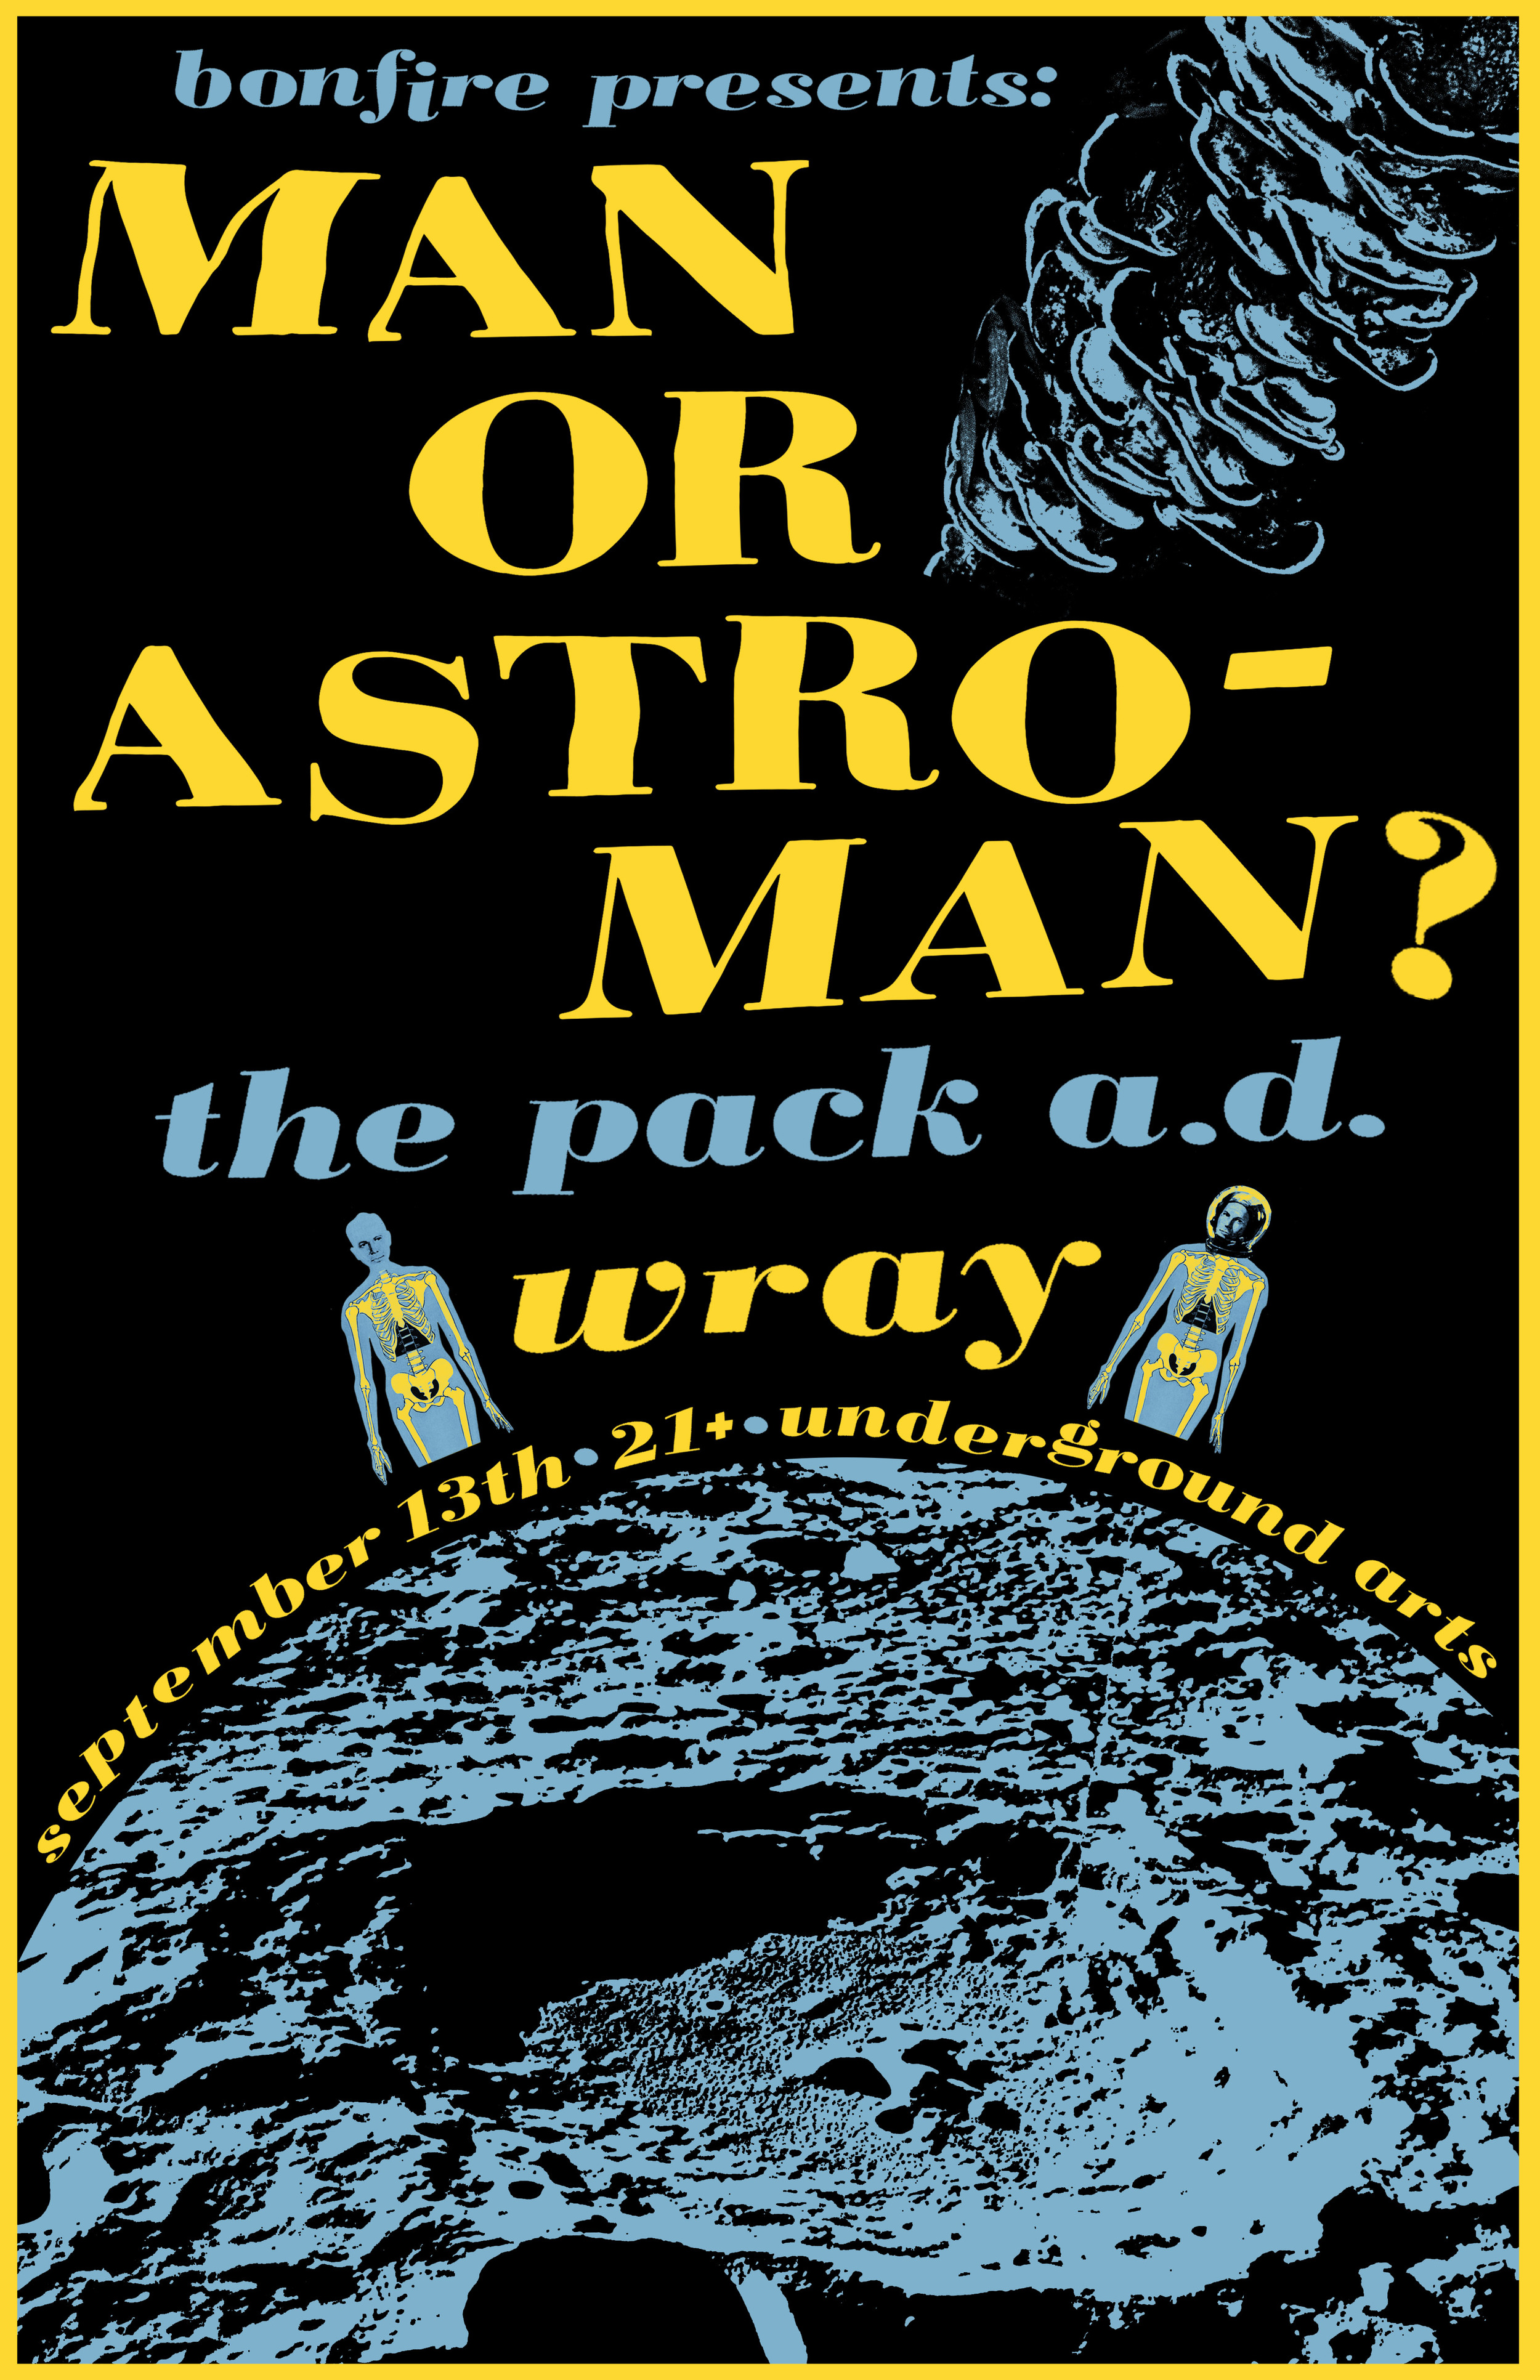 man or astroman poster 2014.jpg